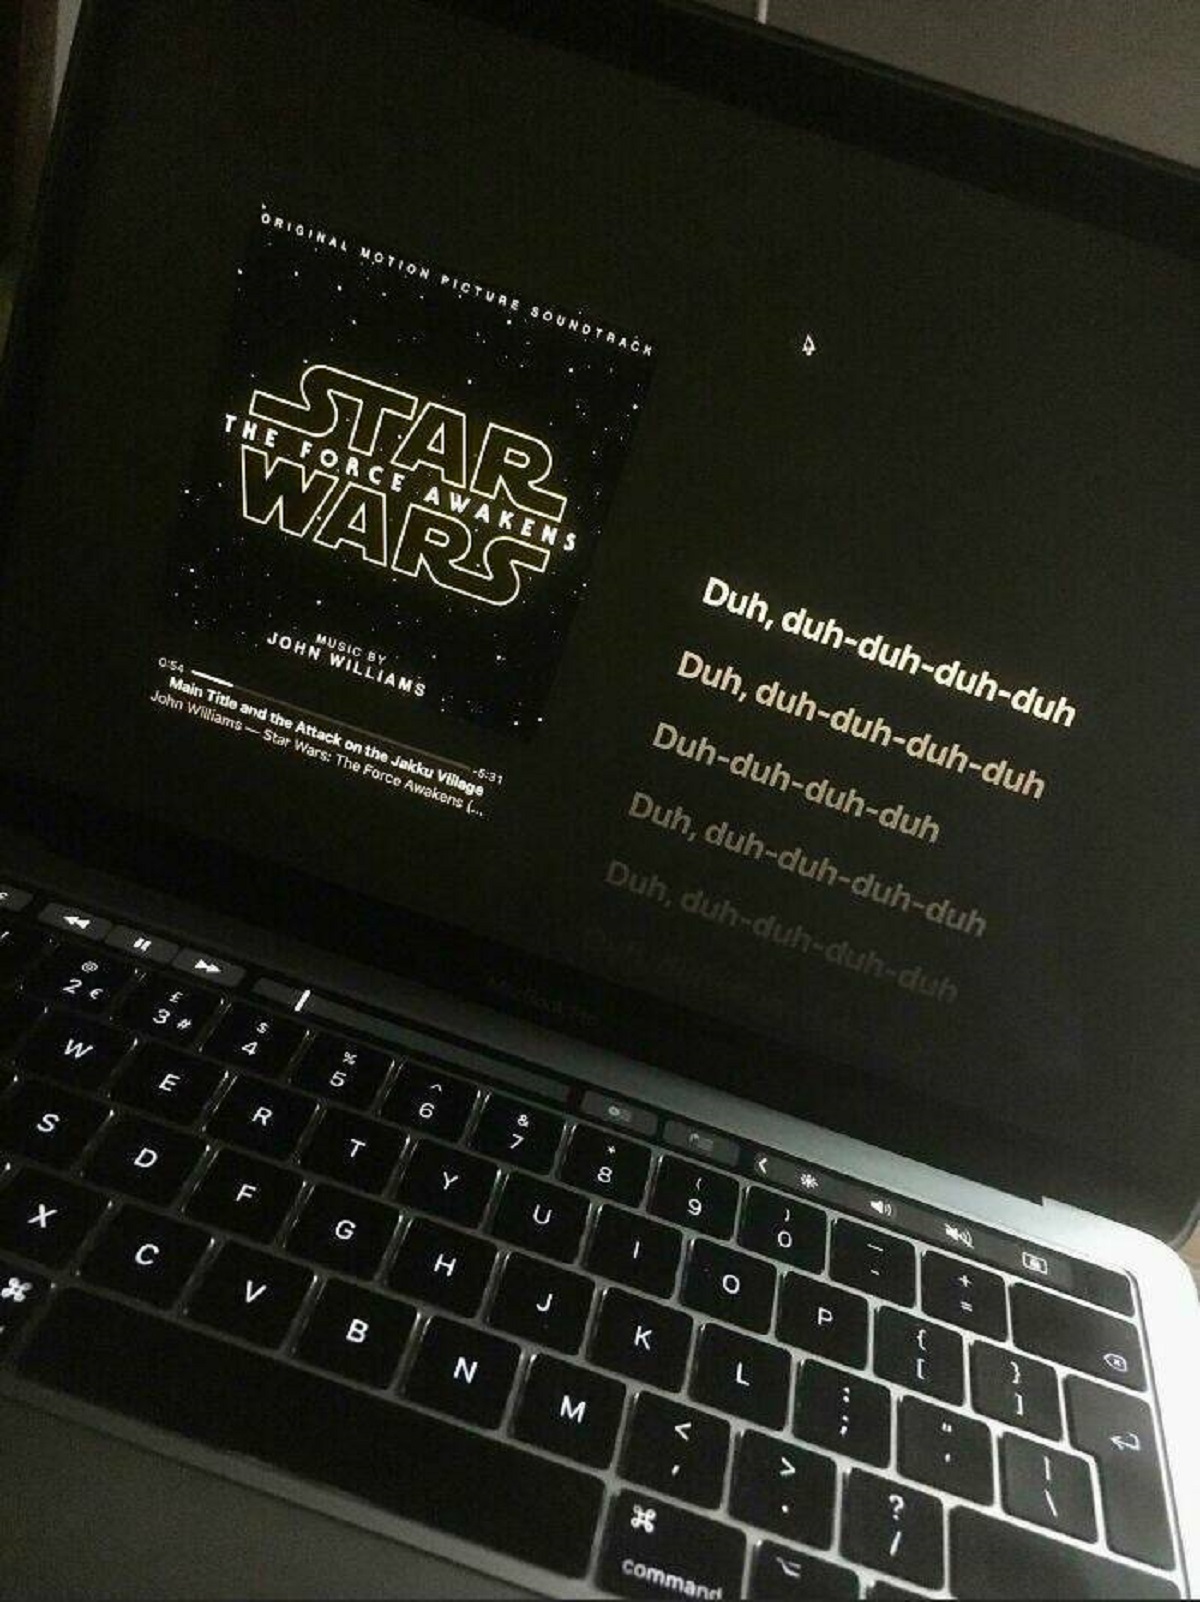 Apple Music Has The Lyrics To The Star Wars Main Theme